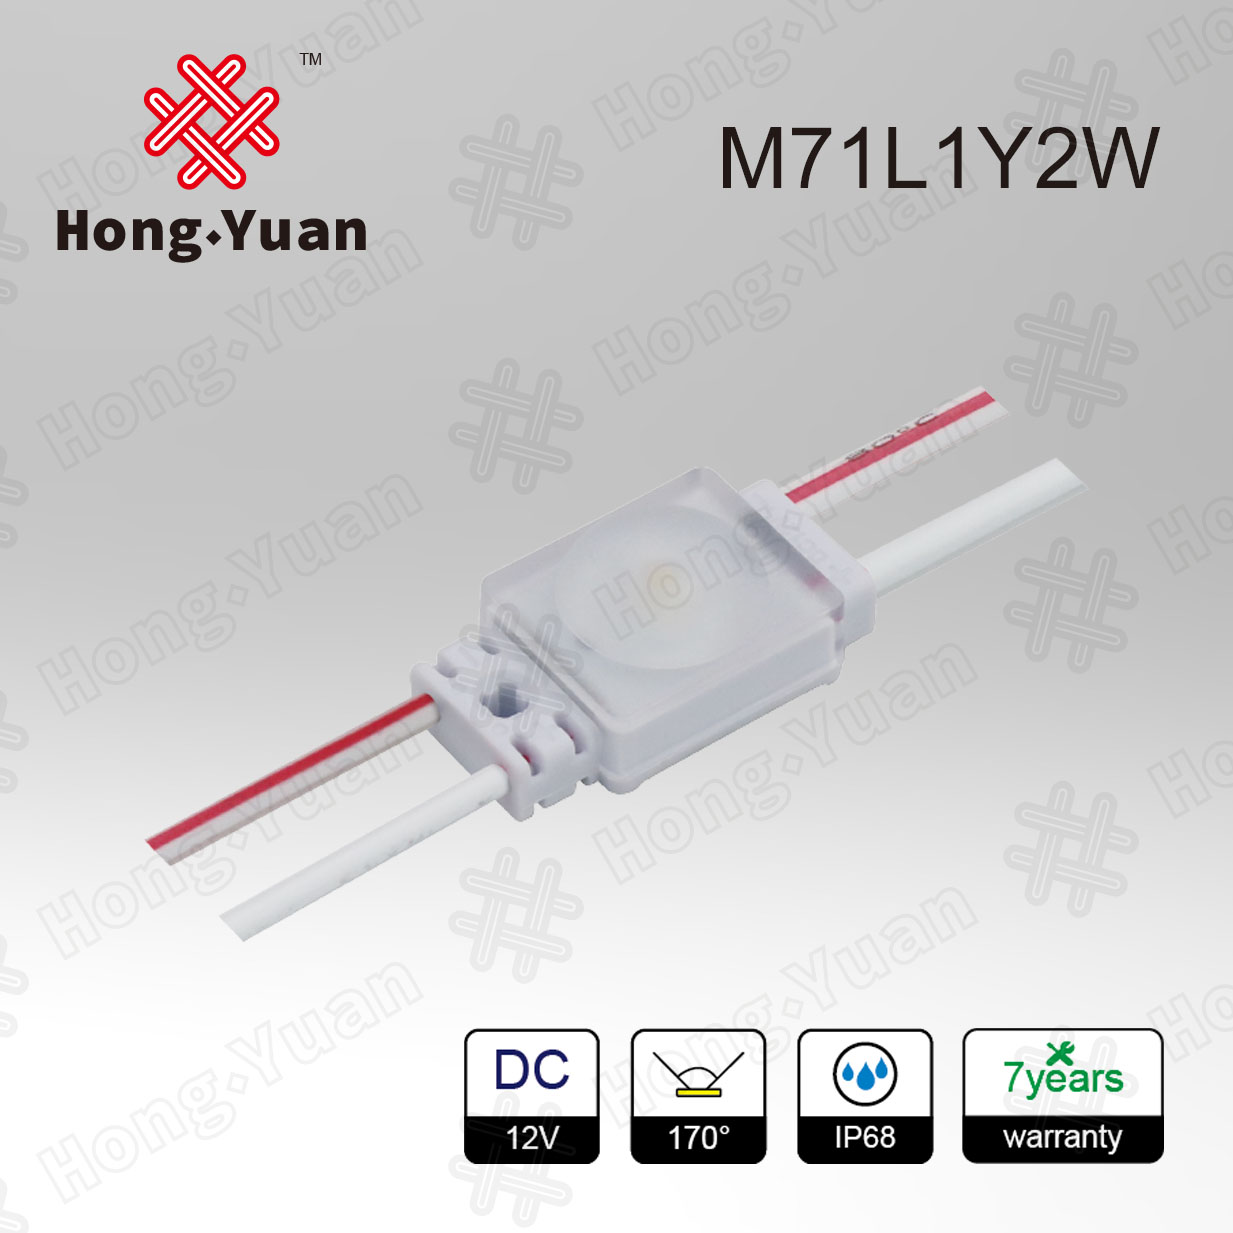 LED Module M71L1Y2W